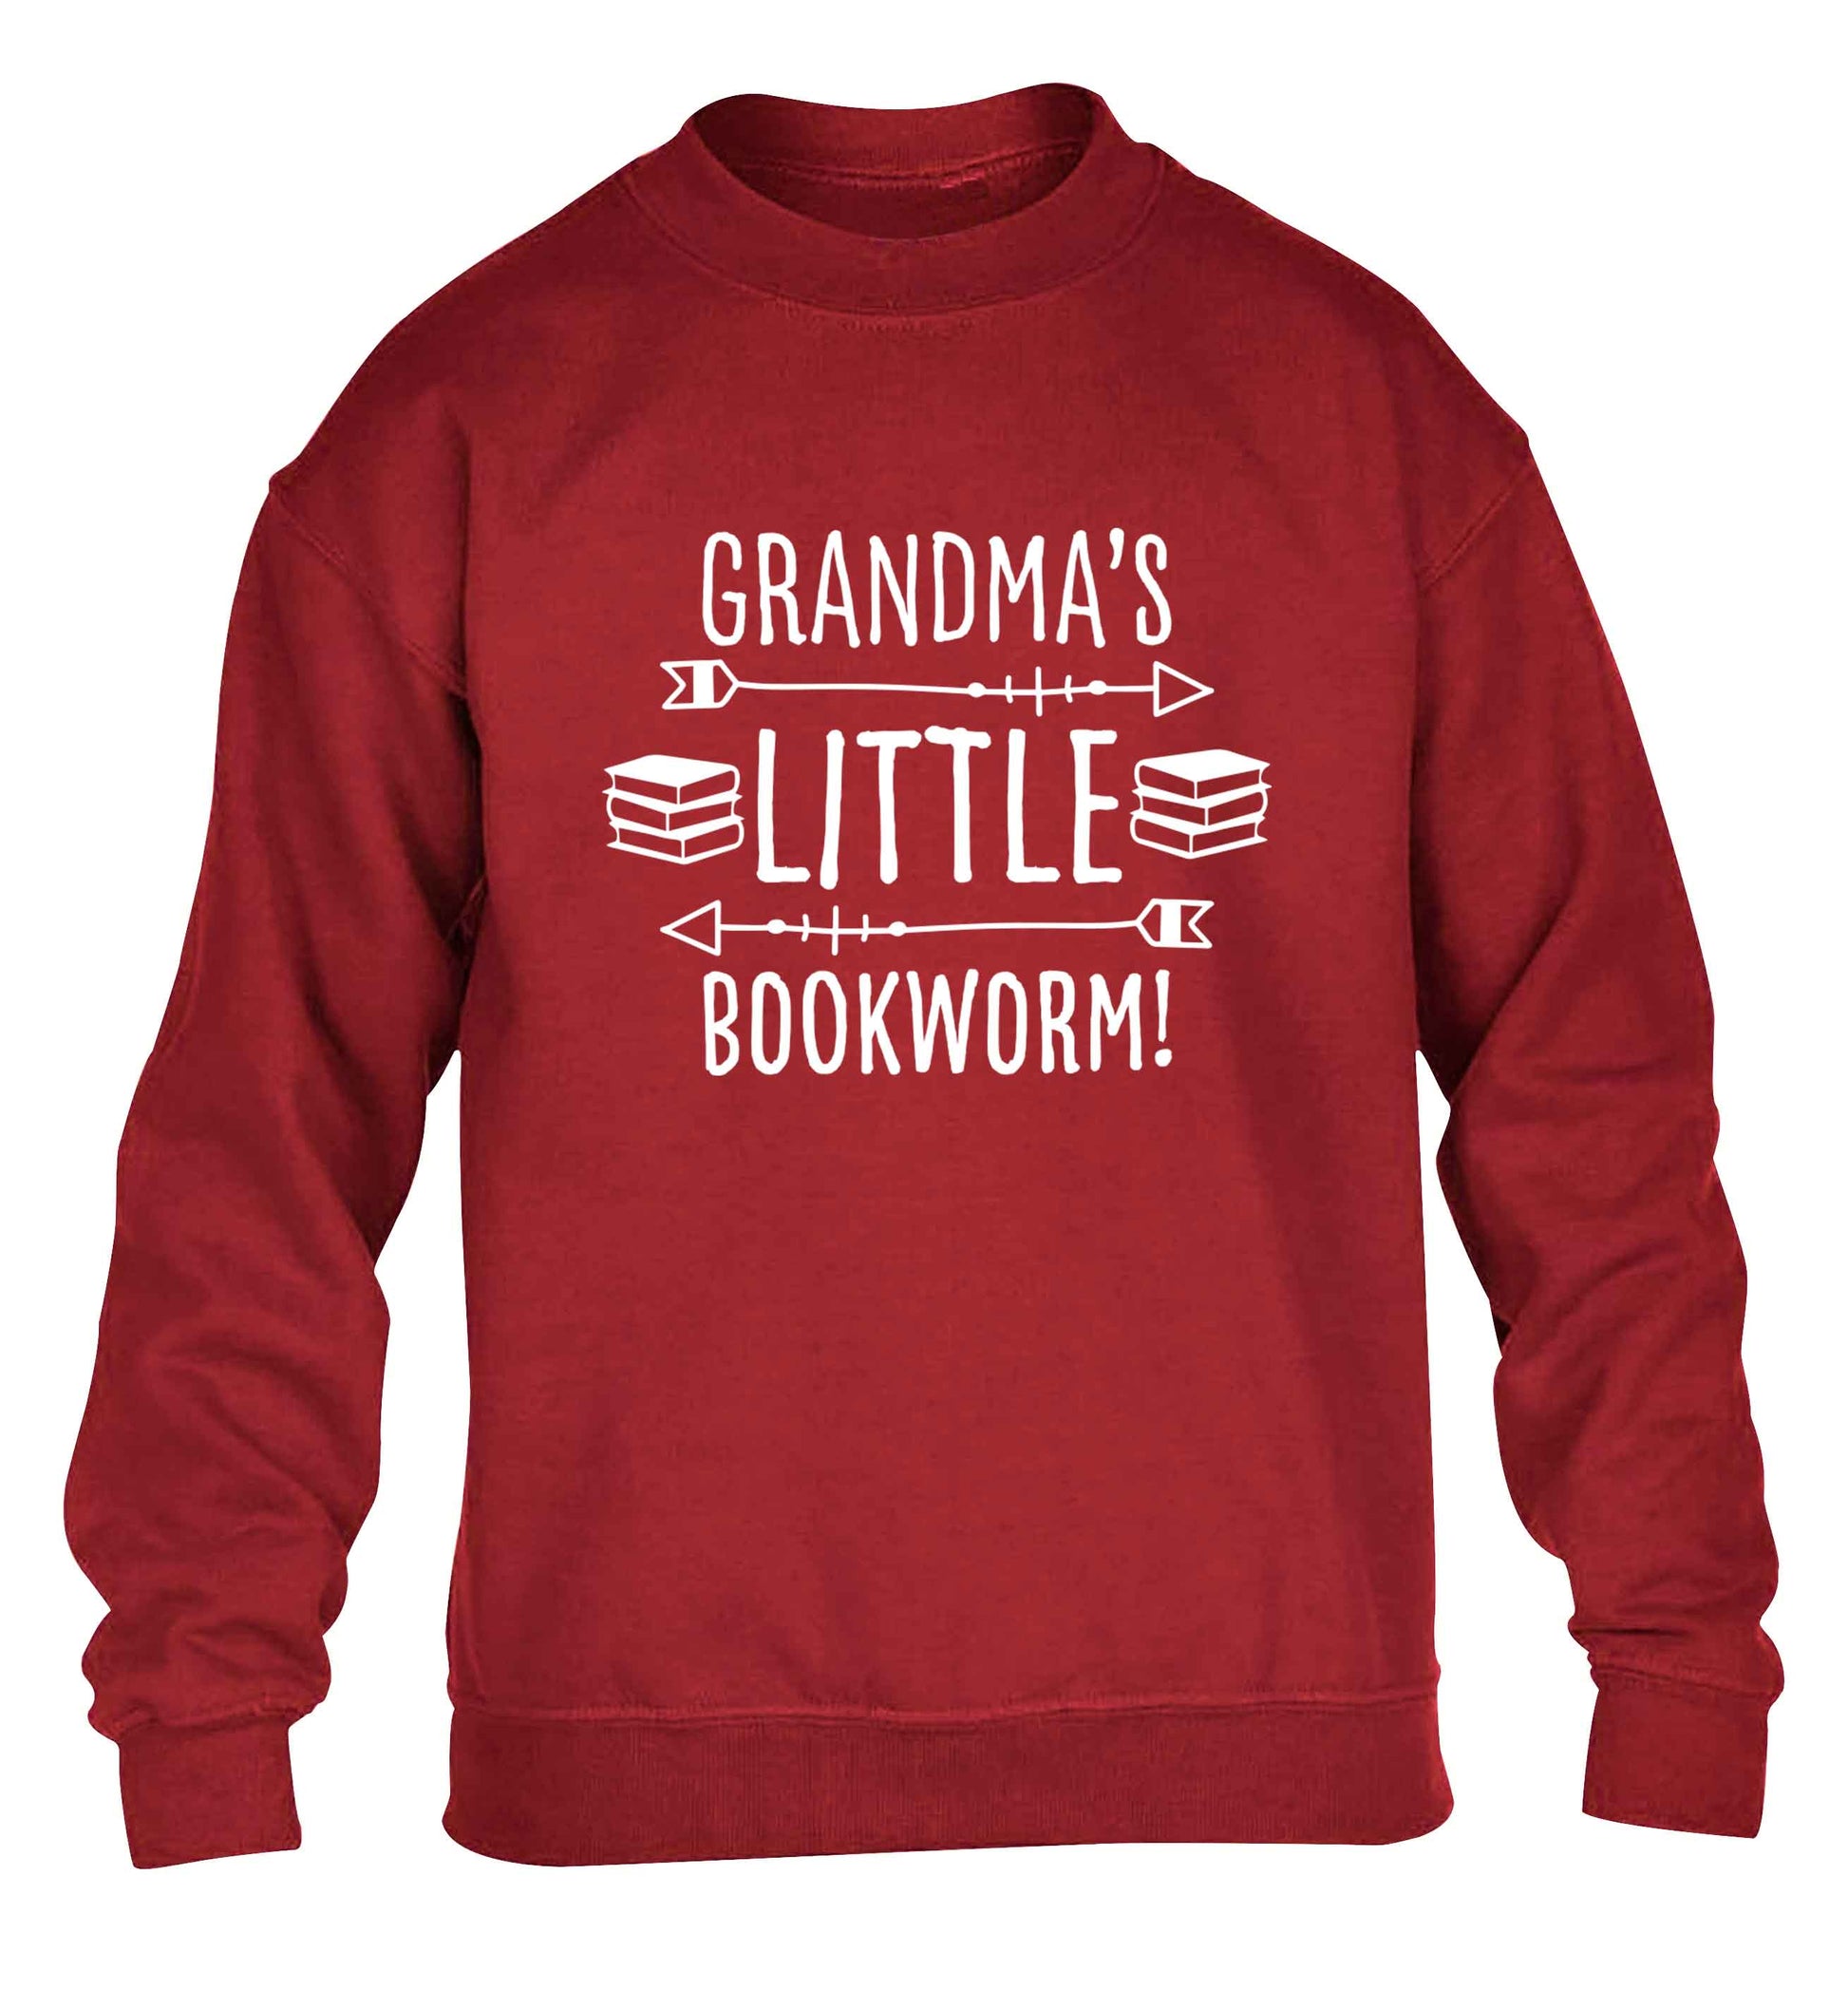 Grandma's little bookworm children's grey sweater 12-13 Years